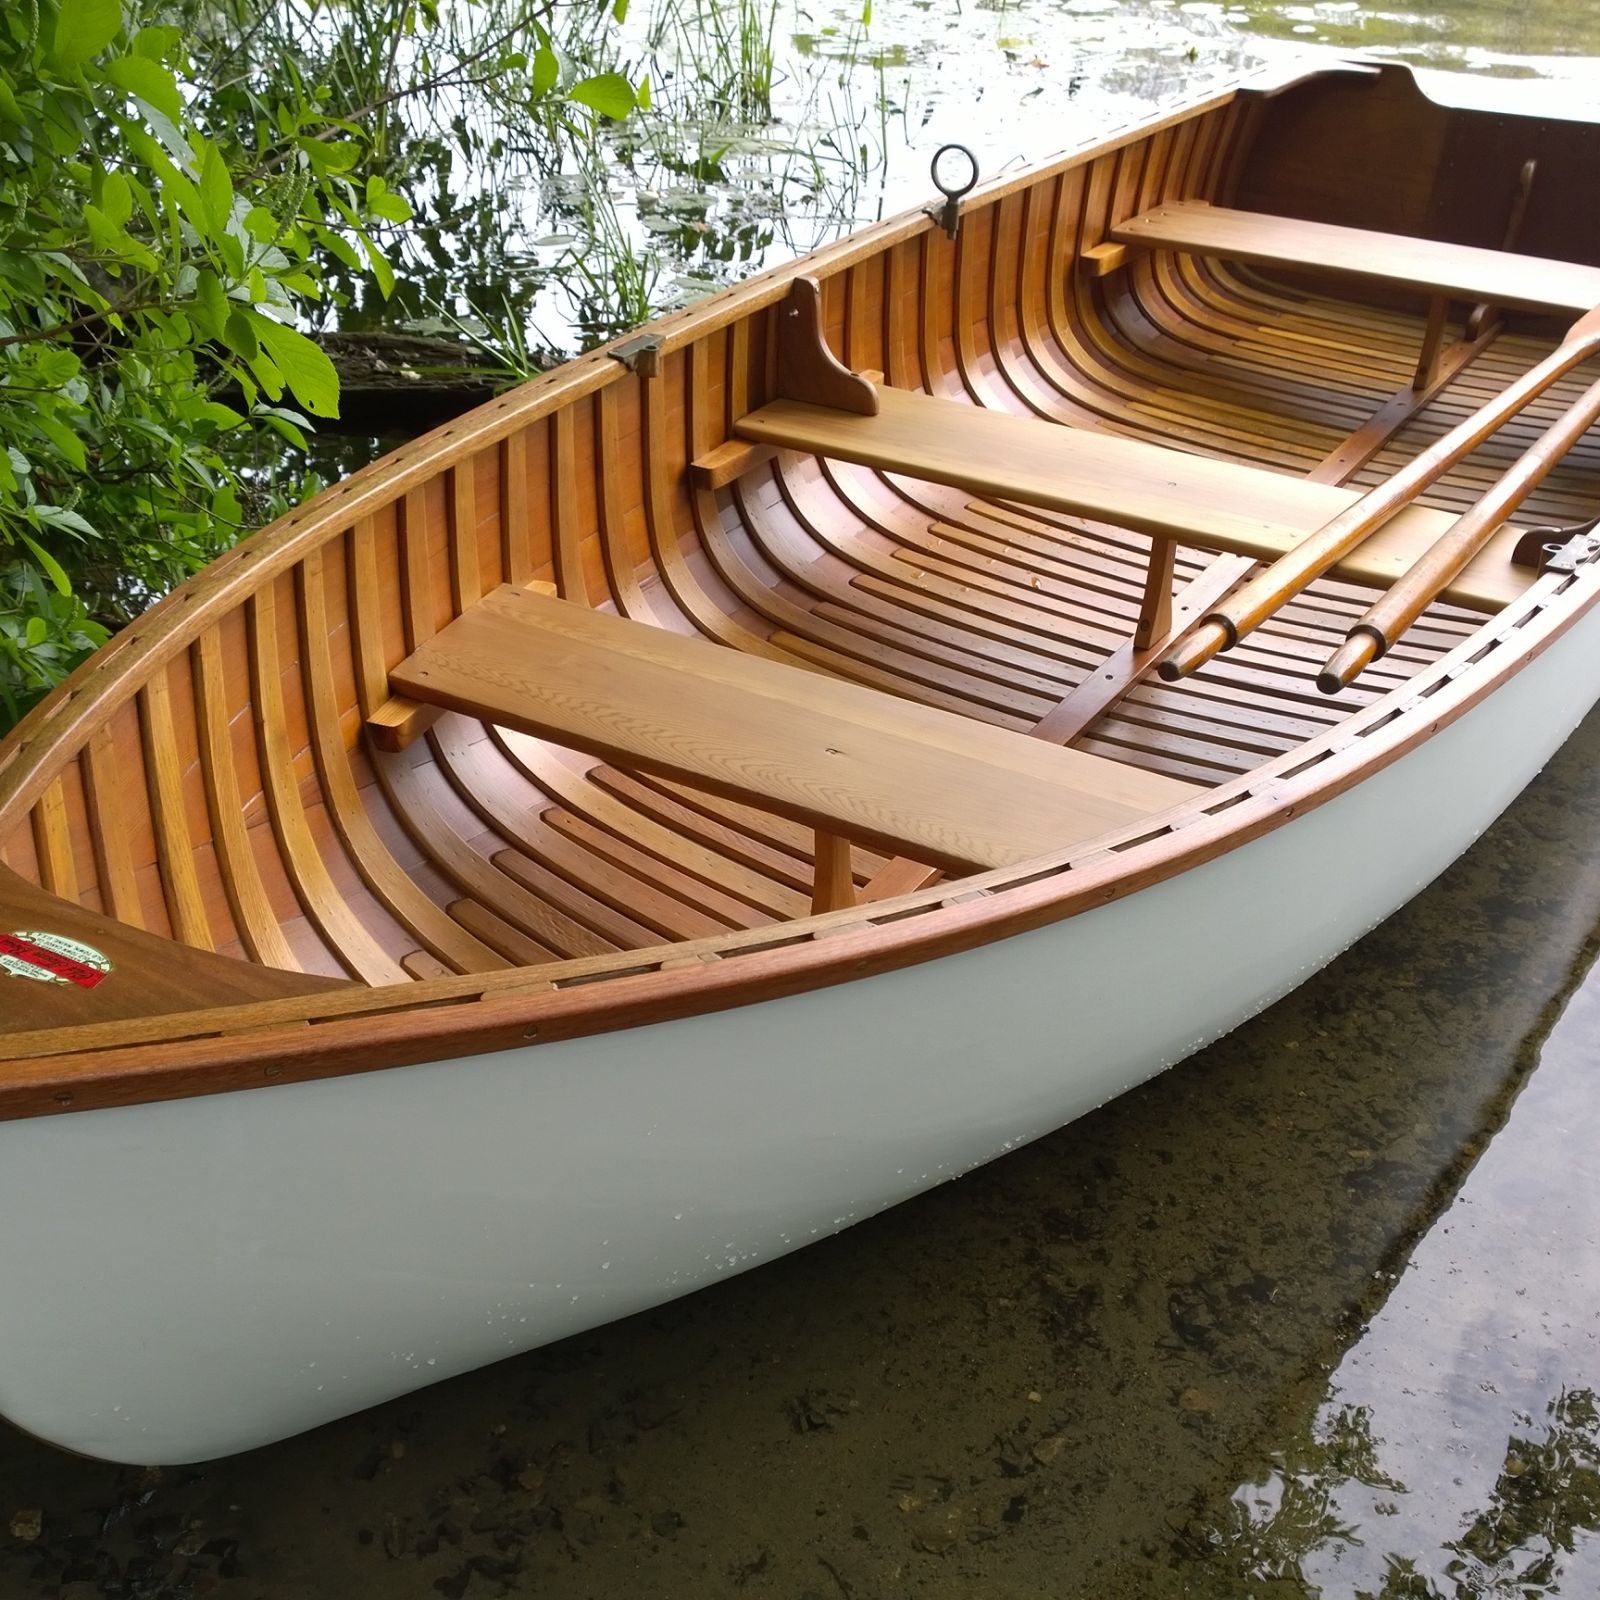 Antique wooden kayak